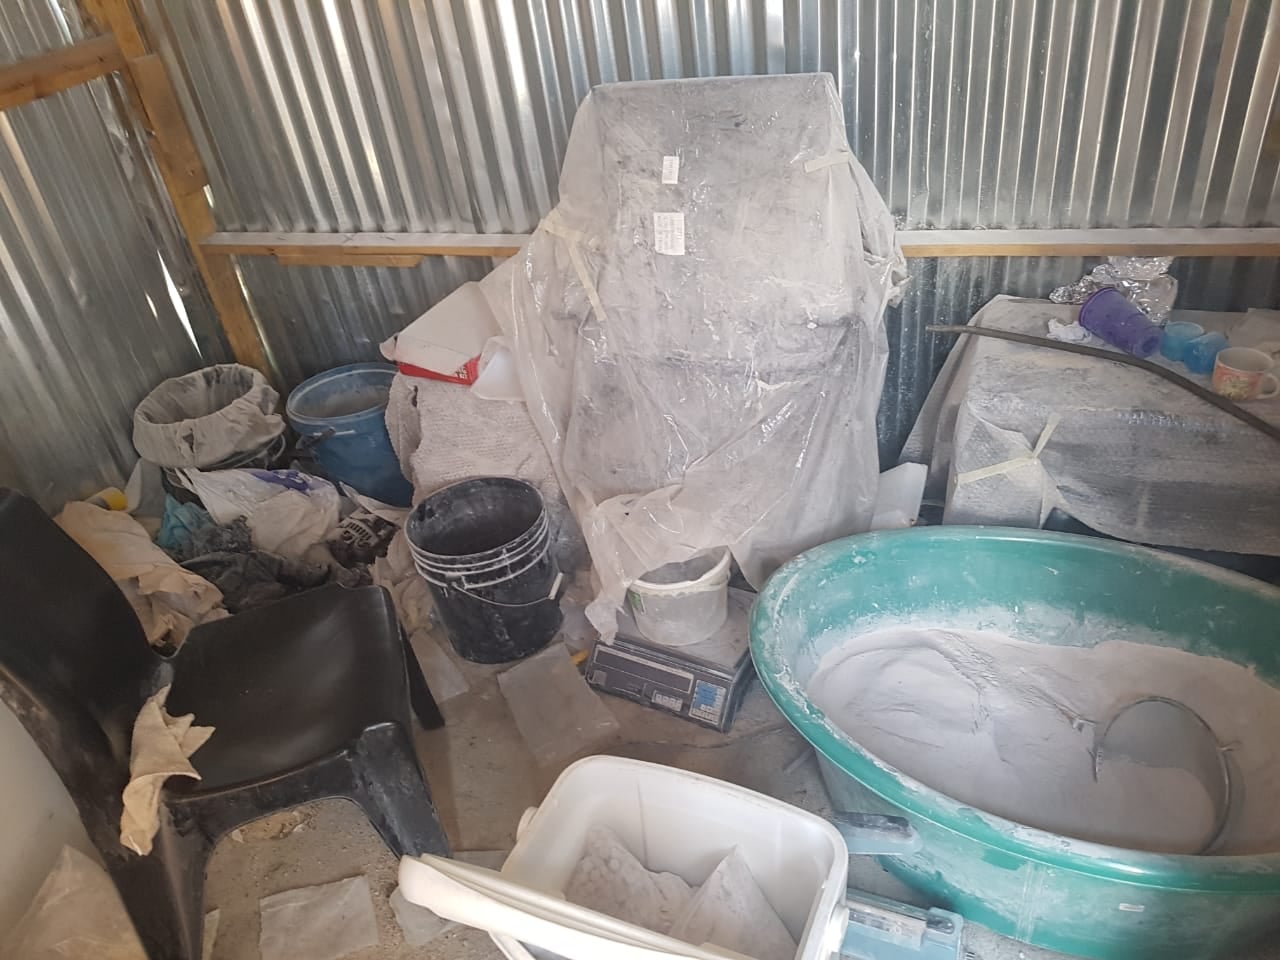 Police uncover clandestine drug manufacturing laboratory in Soweto, suspect arrested